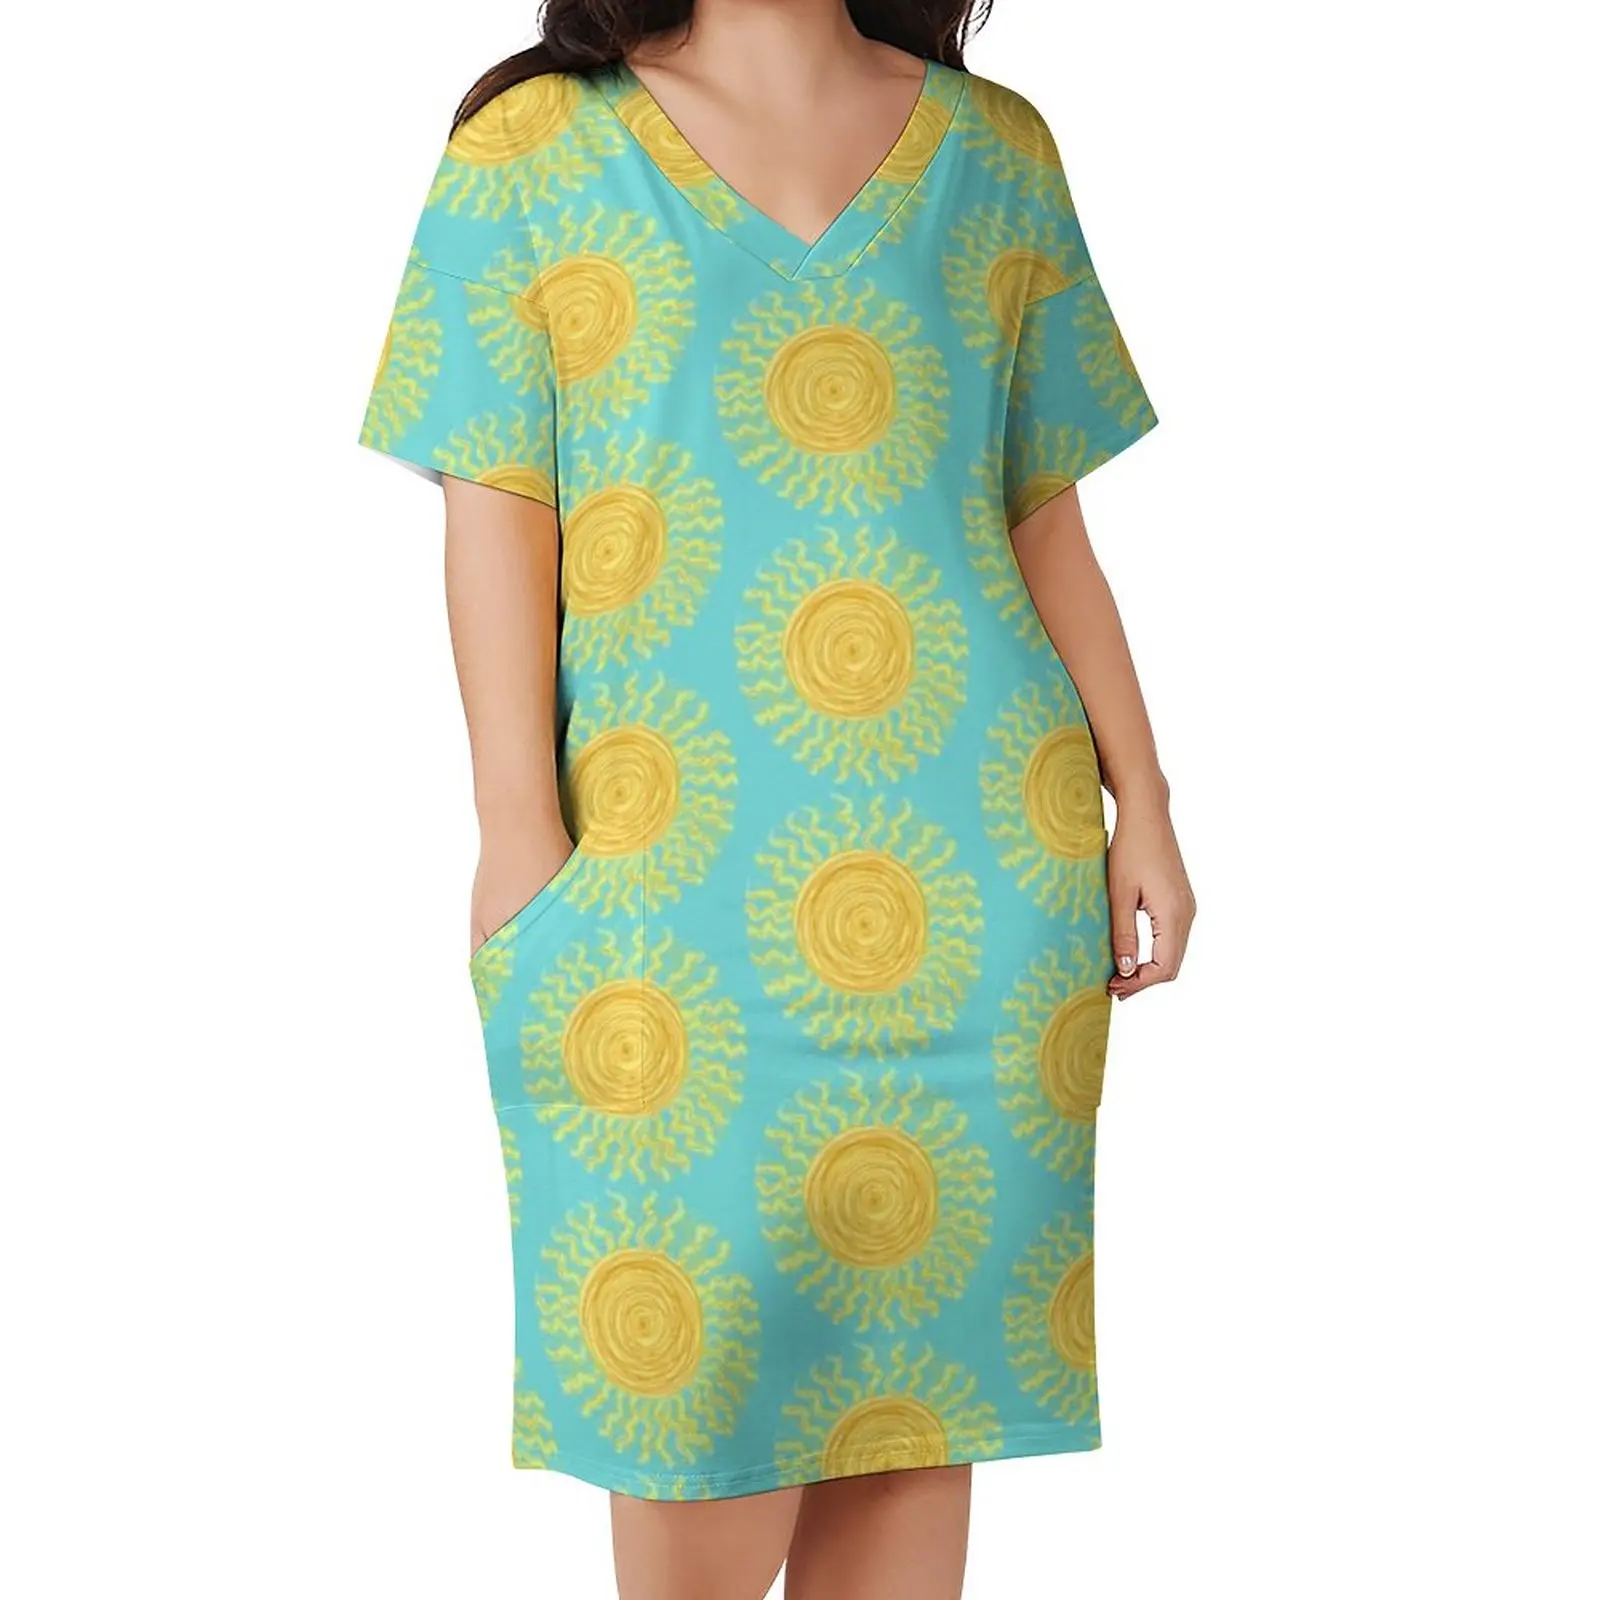 

Abstract Sun Print Dress Plus Size Sunshine Pattern Aesthetic Casual Dress Woman Summer V Neck Retro Dresses Gift Idea